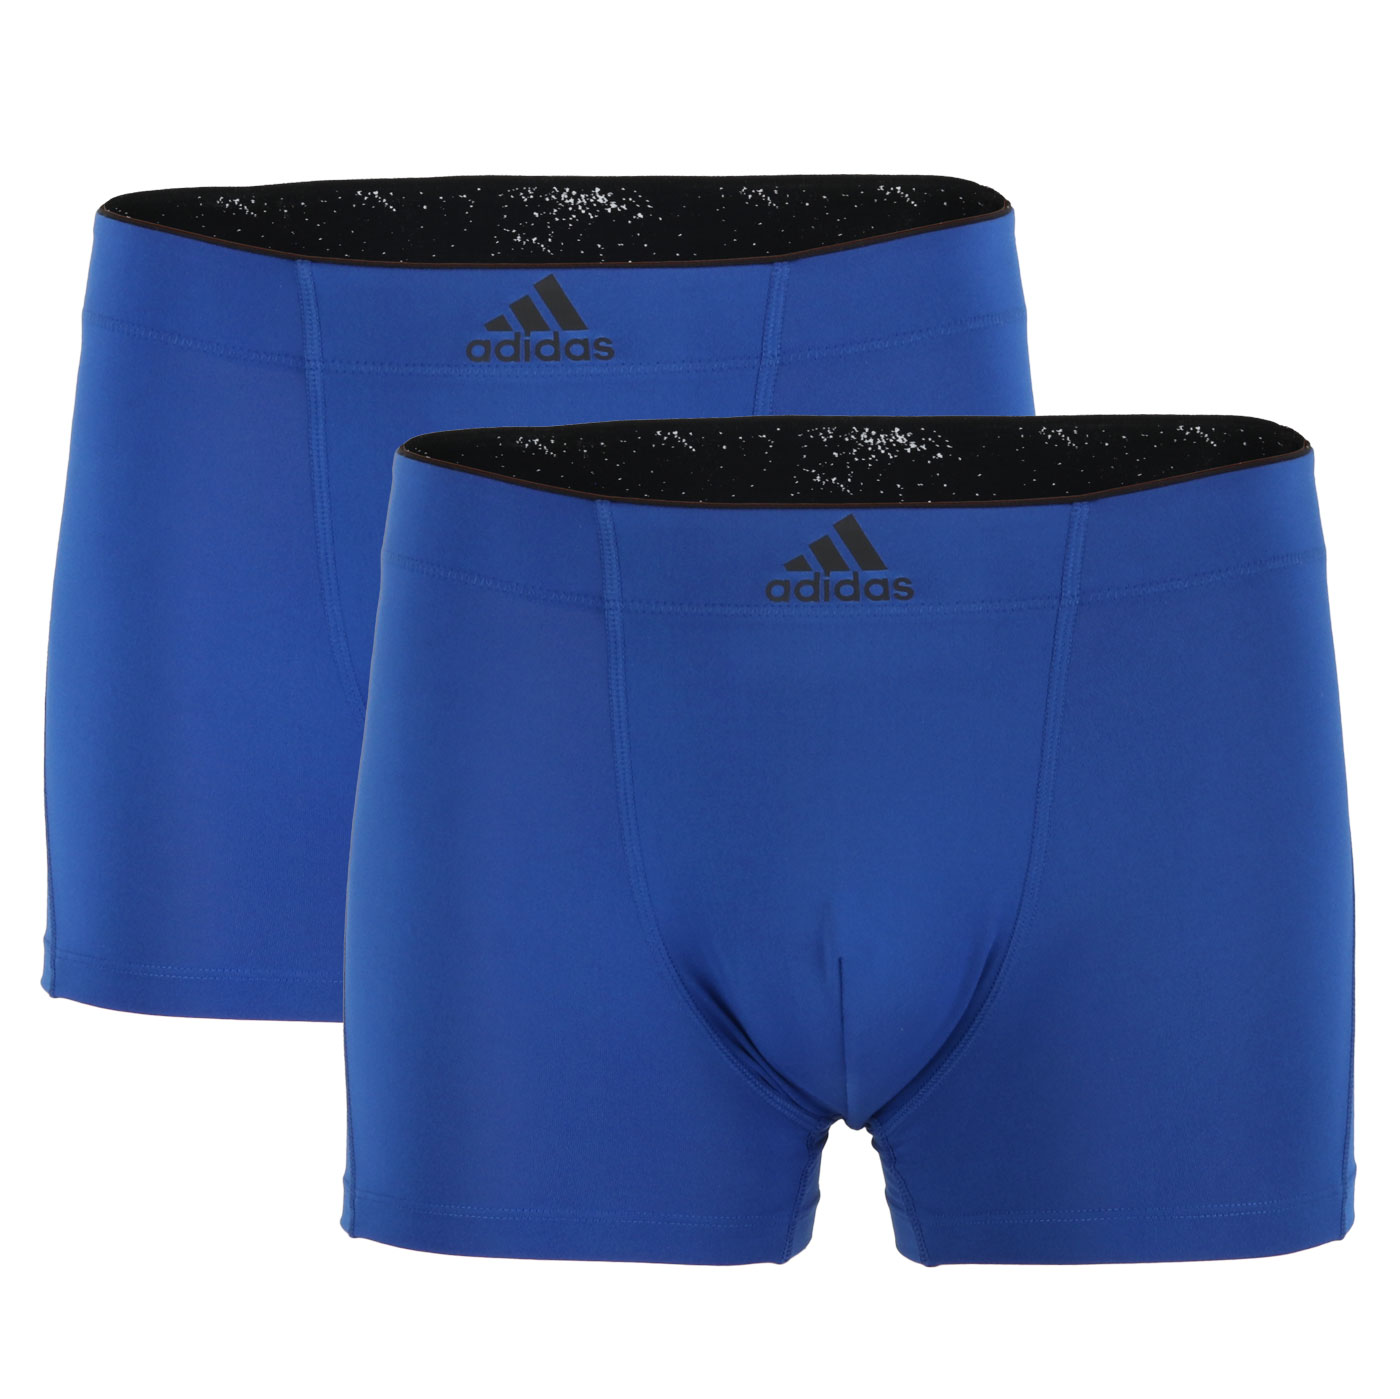 https://images.bike24.com/i/mb/d7/fc/f4/adidas-sports-underwear-trunk-2-pack-blue-1479295.jpg